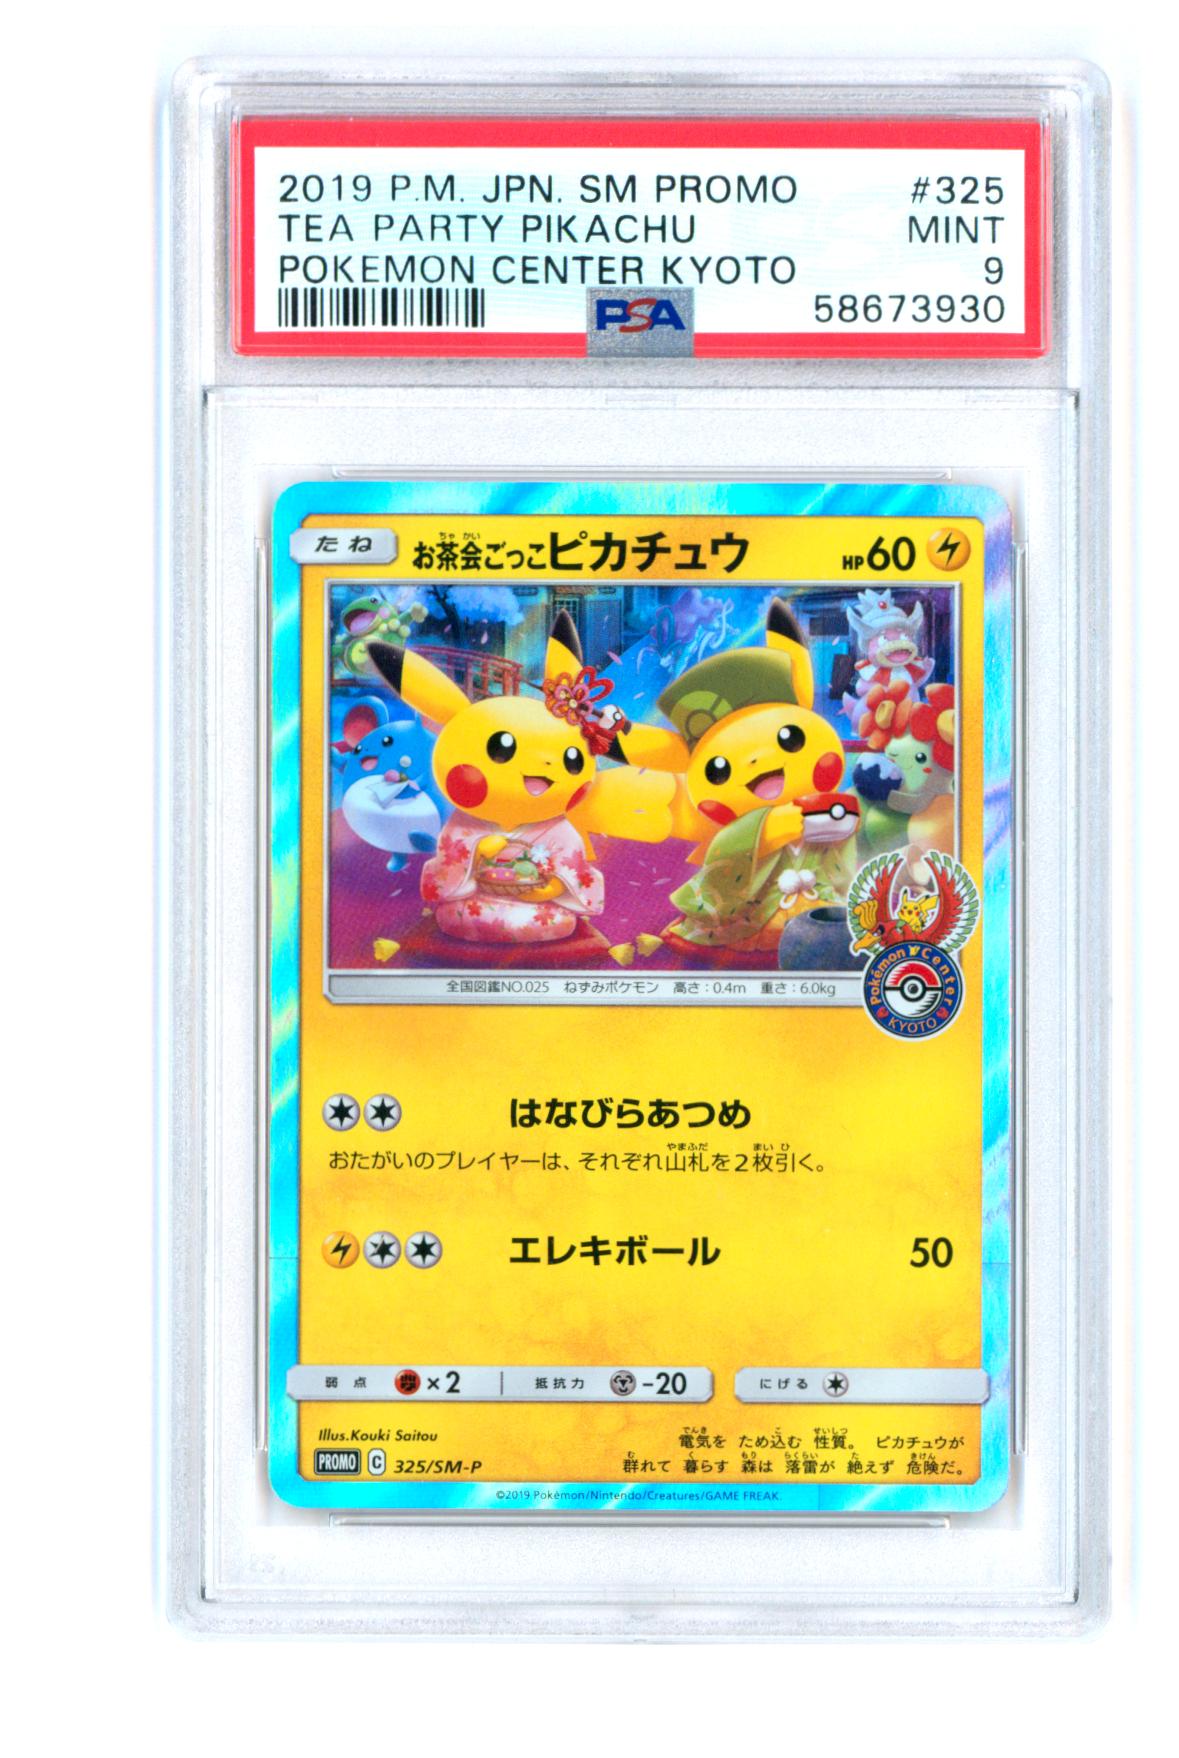 Tea Party Pikachu 325/SM-P - Pokemon Center Kyoto Promo - PSA 9 MINT - Pokémon